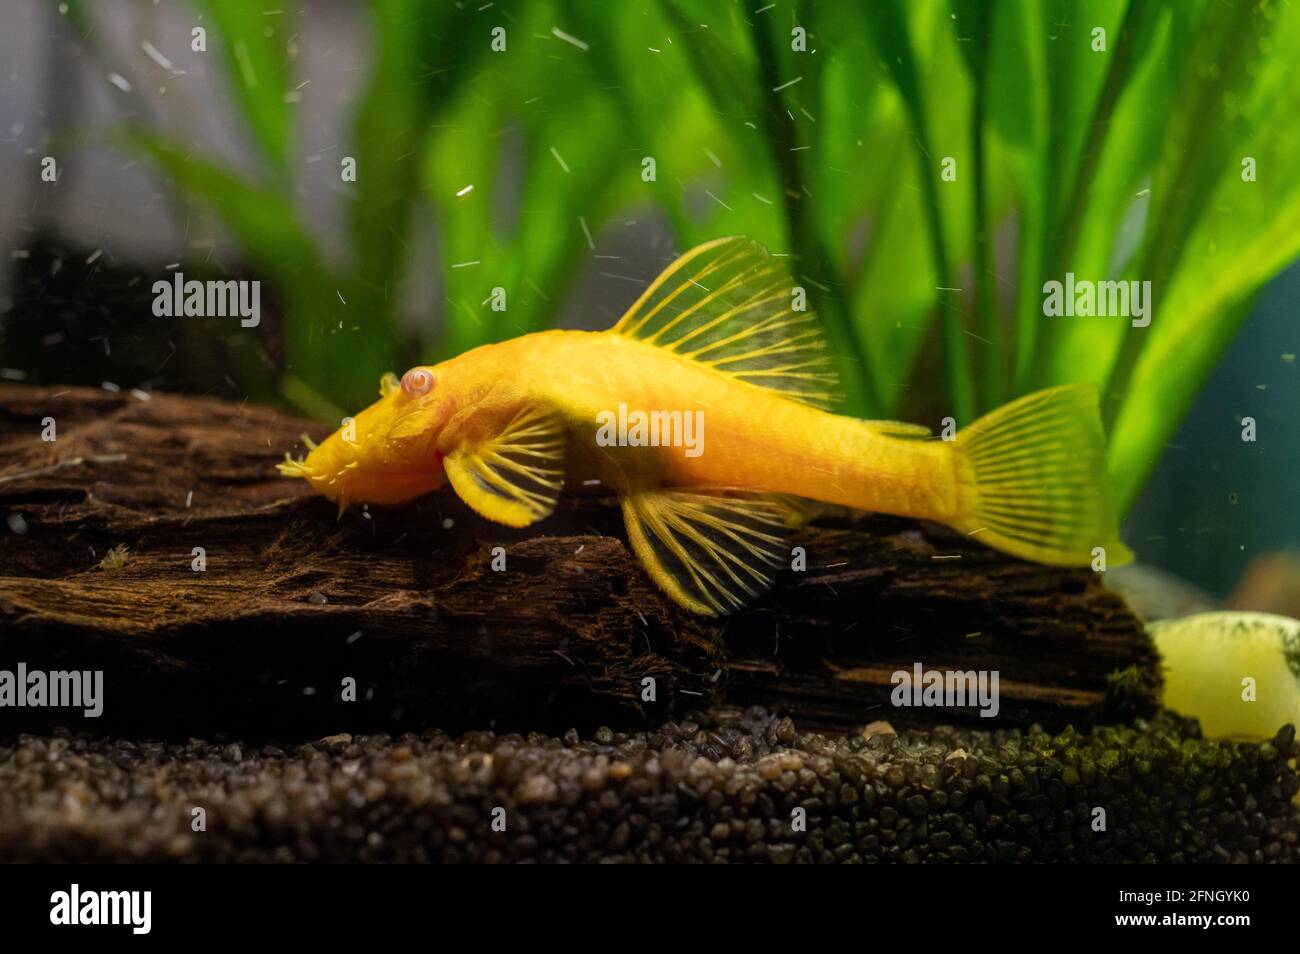 Closeup shot of a beautiful Ancistrus Gold fish swimming underwater Stock Photo